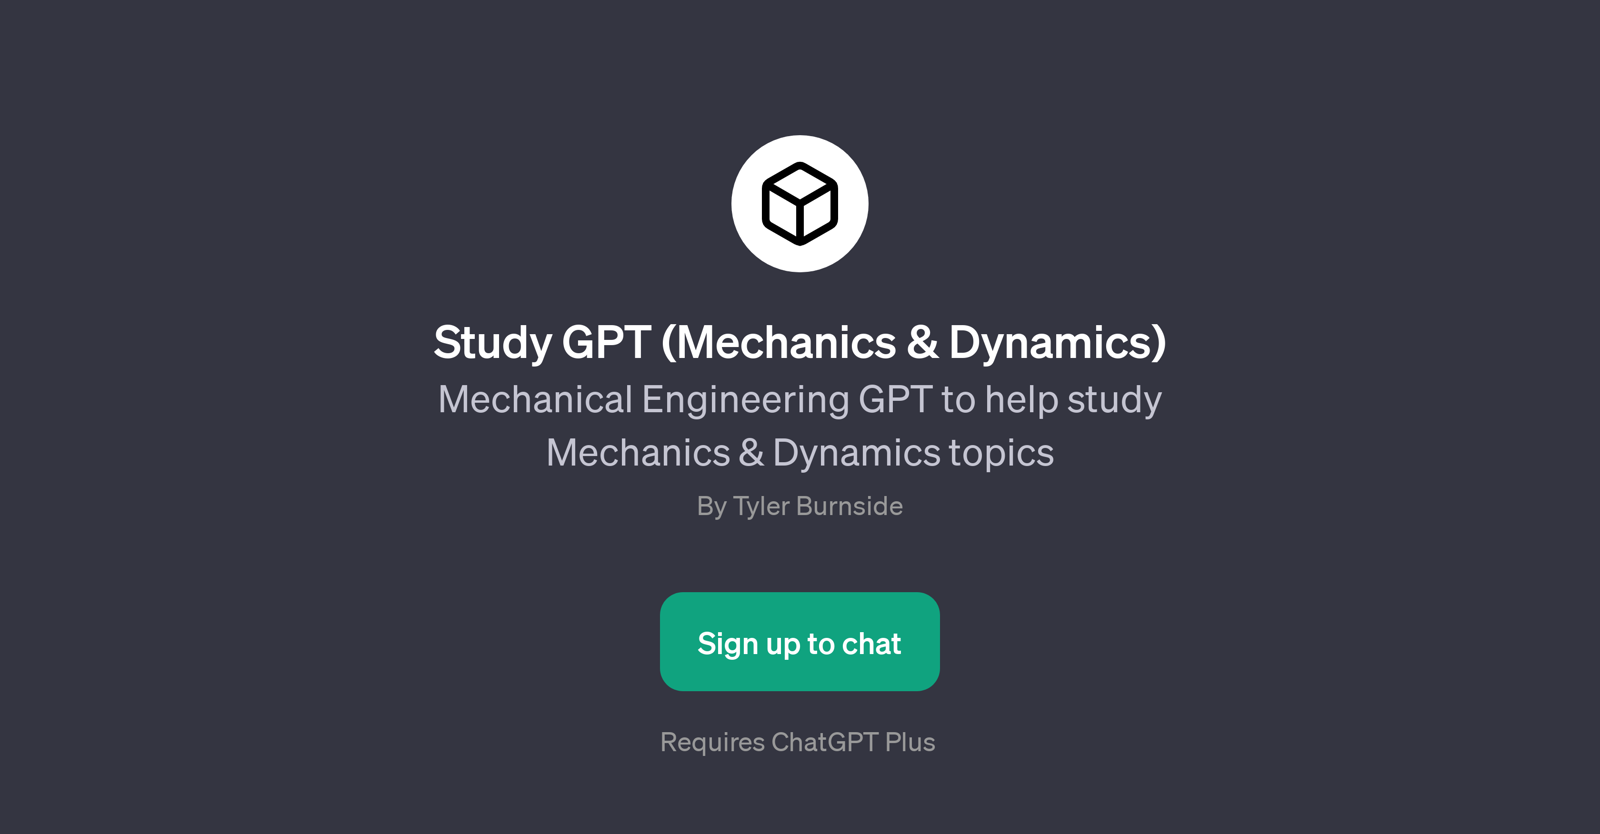 Study GPT (Mechanics & Dynamics) website